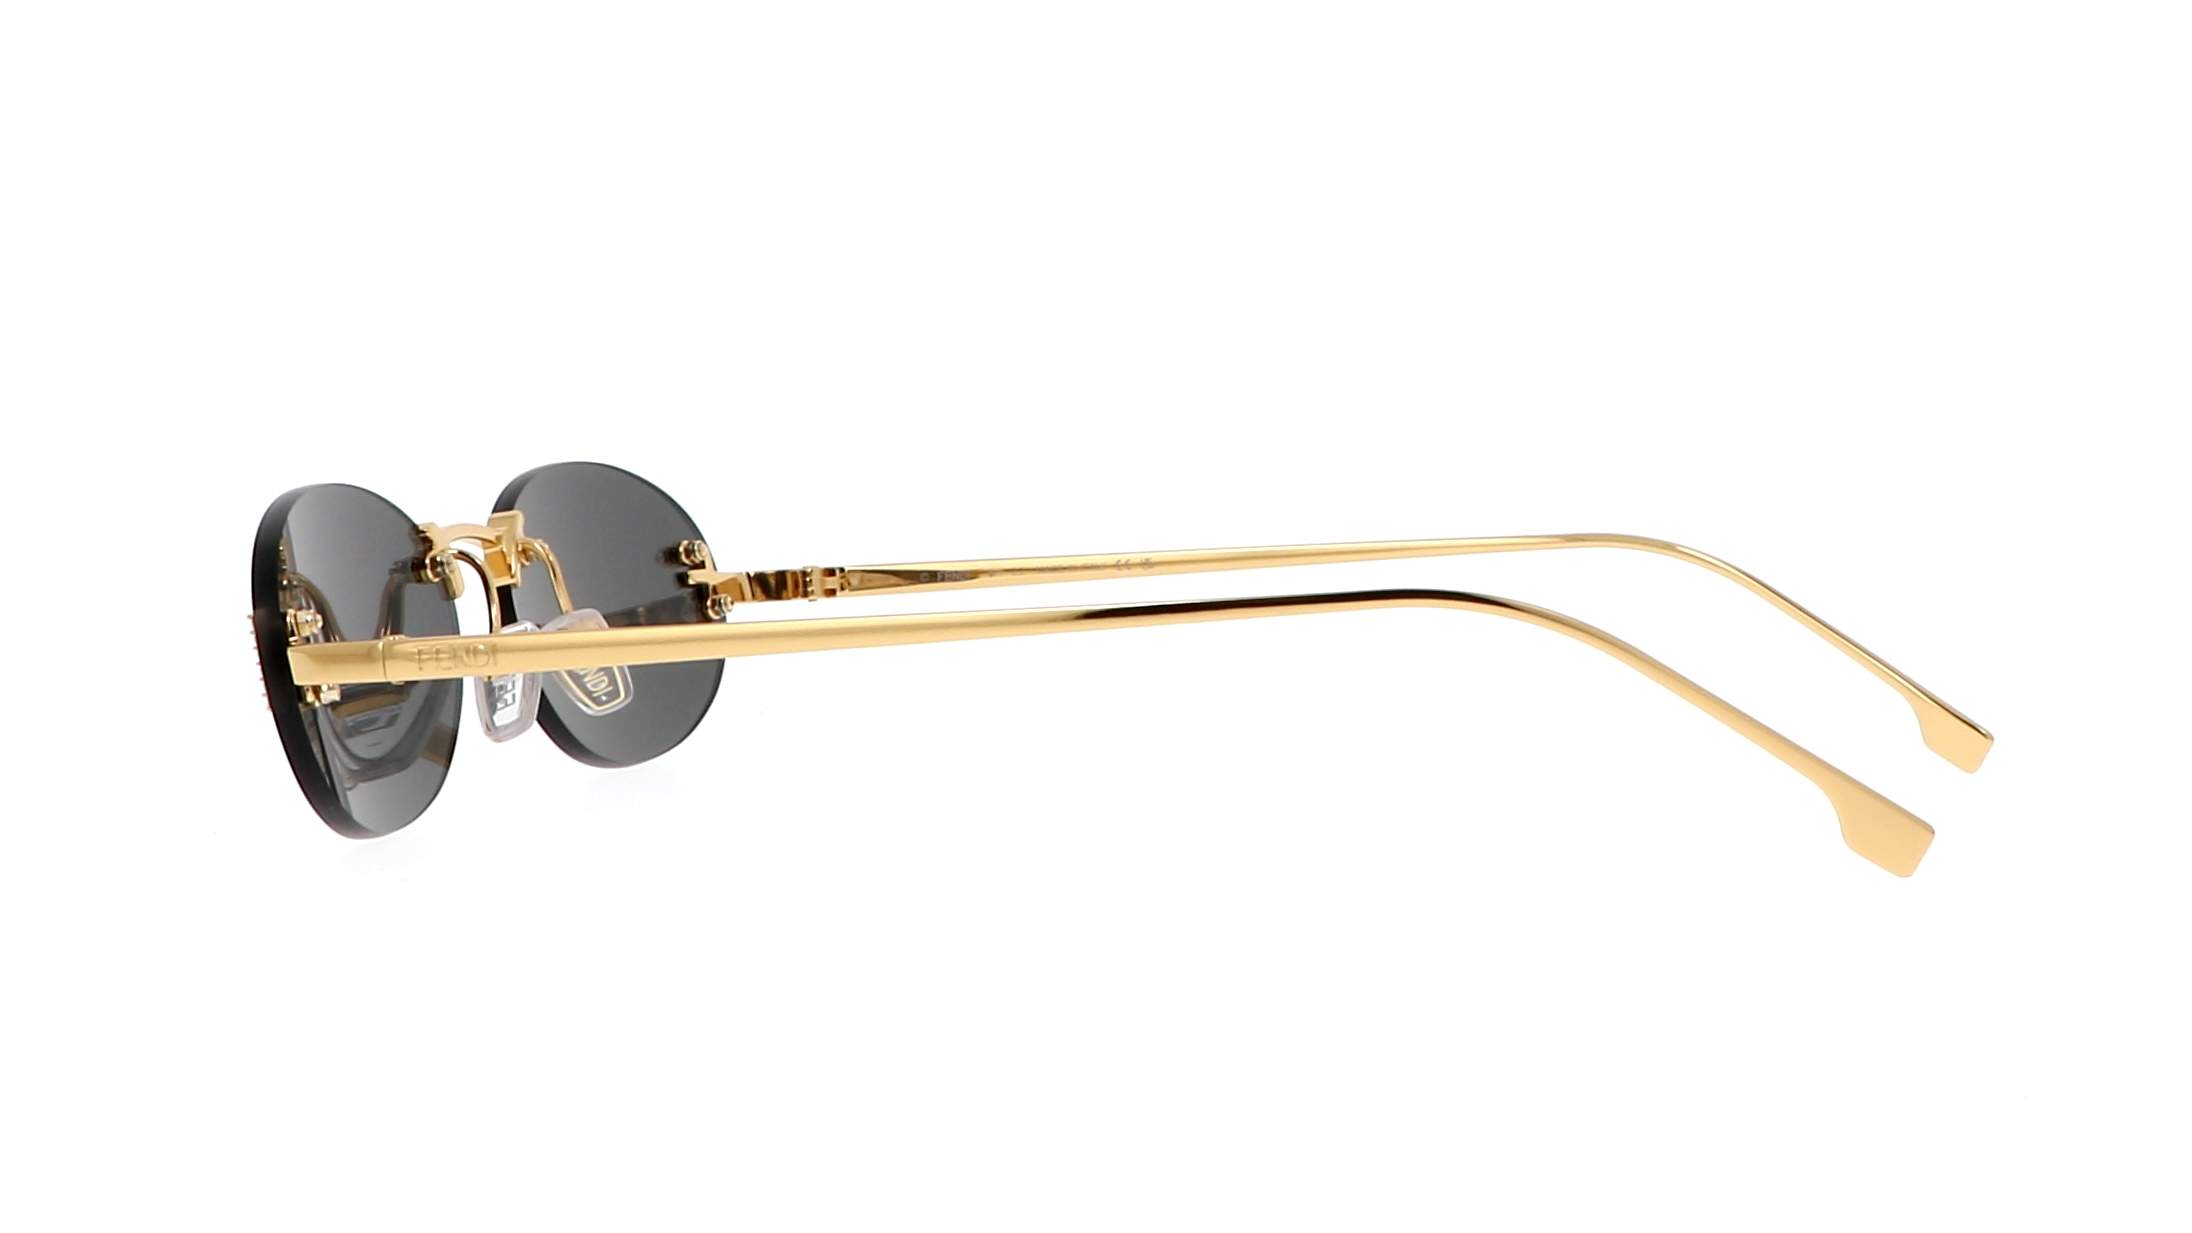 Gold Fendi First rimless oval metal sunglasses, Fendi Eyewear